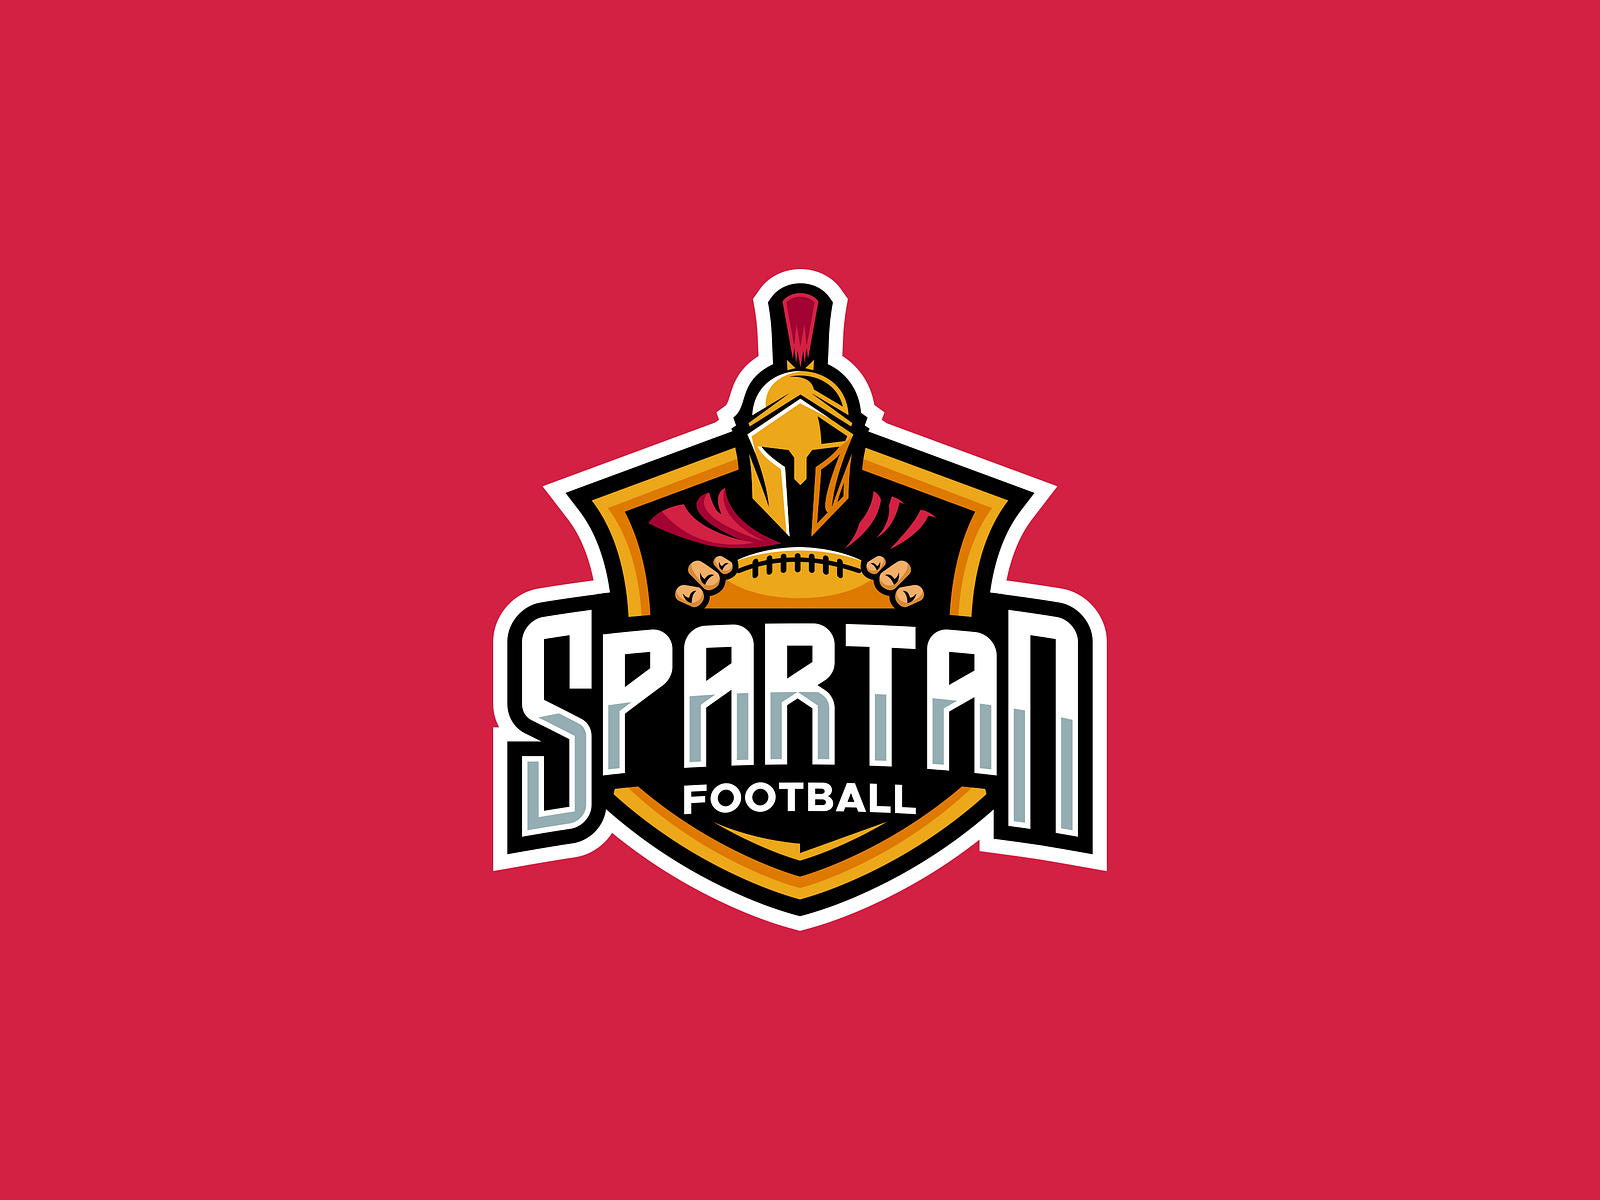 Spartan Football Logo by Bounvi on Dribbble